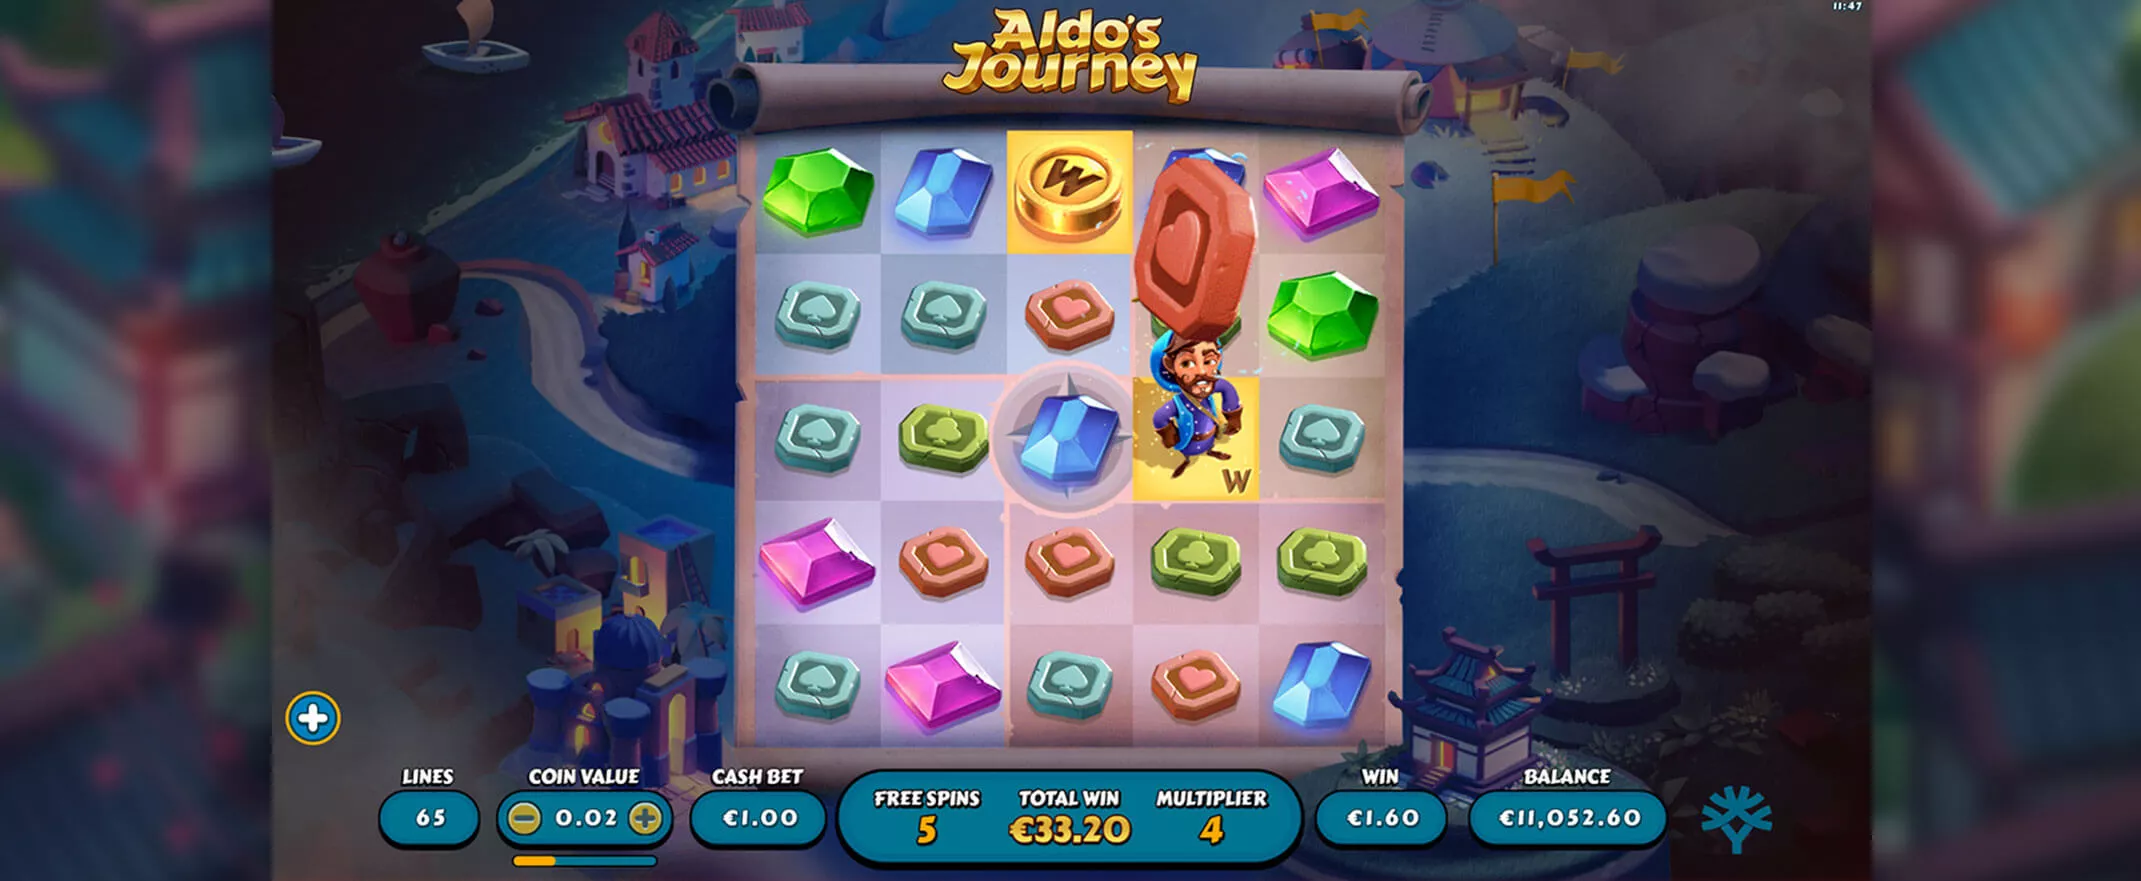 Aldo's Journey Slot Screenshot